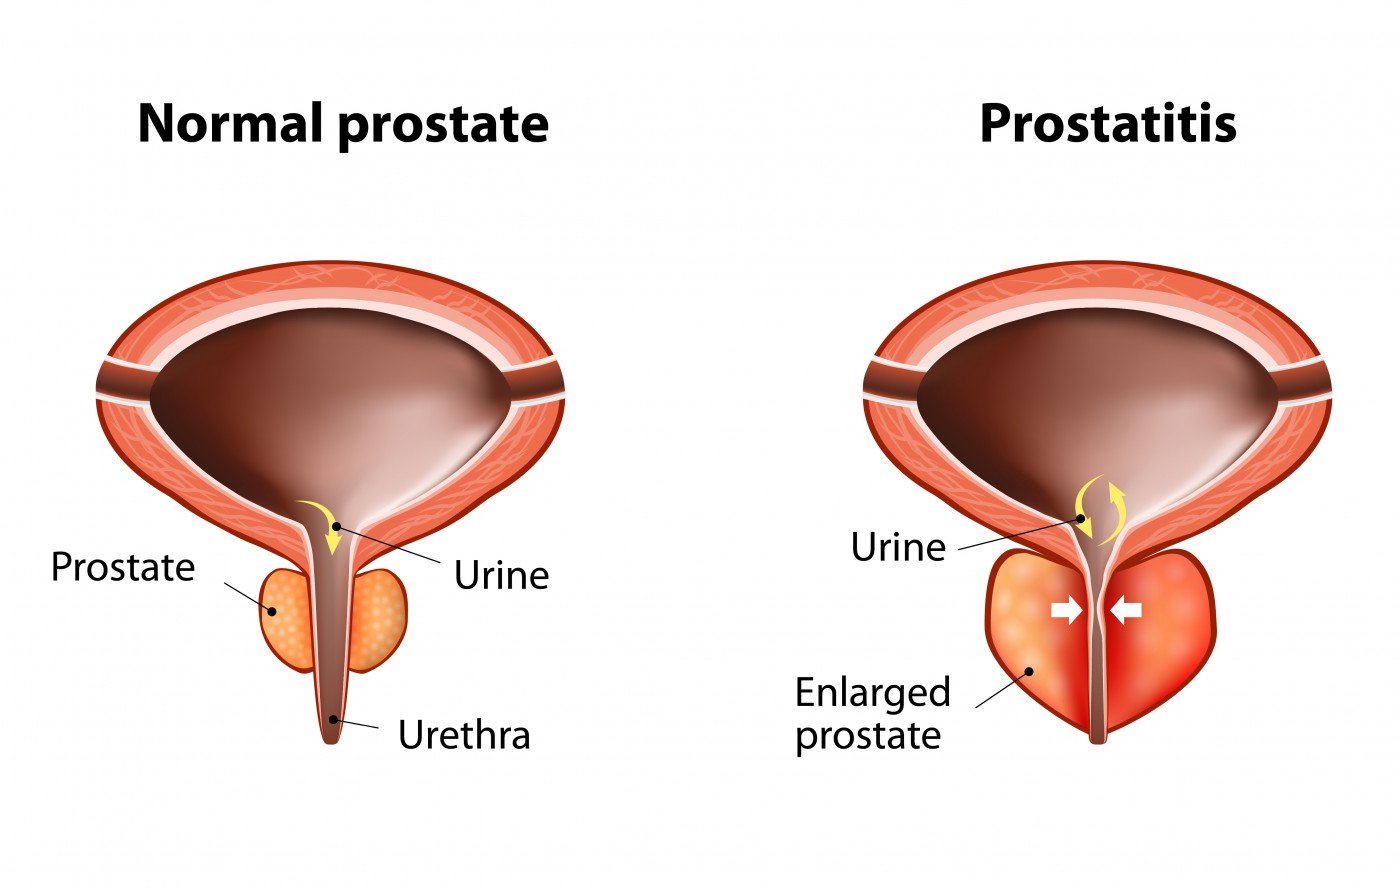 Prostatitis: What You Need to Know